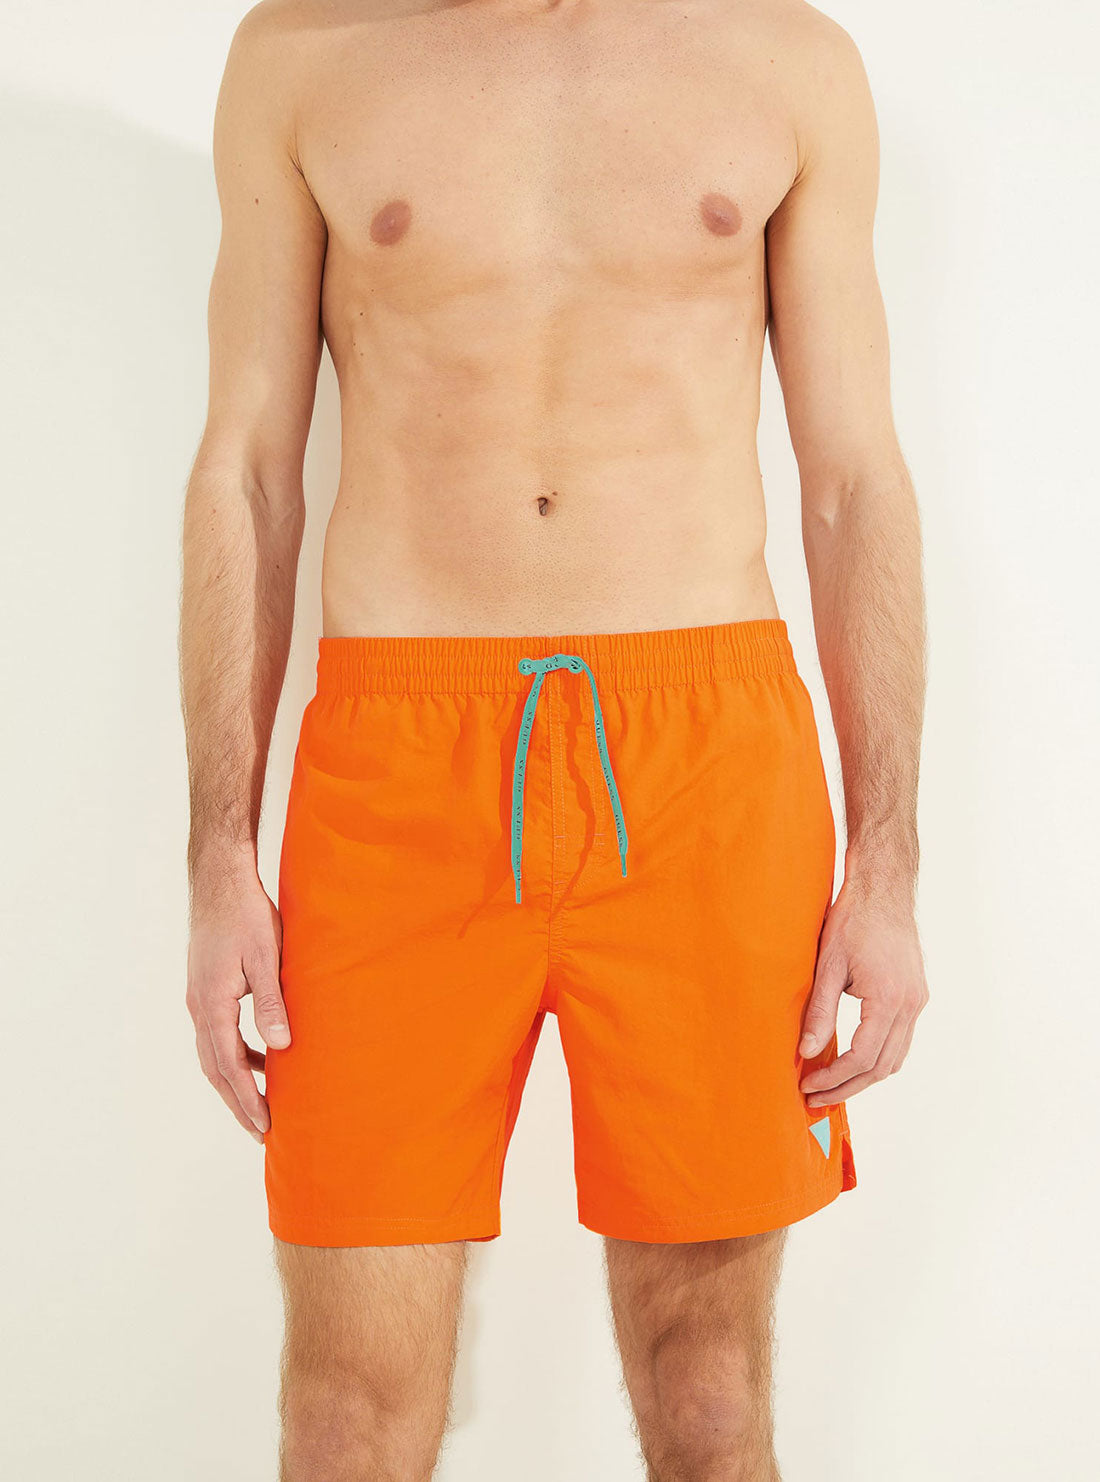 GUESS Men's Orange Nylon Woven Medium Swim Trunks F2GT26TEL27 Front View